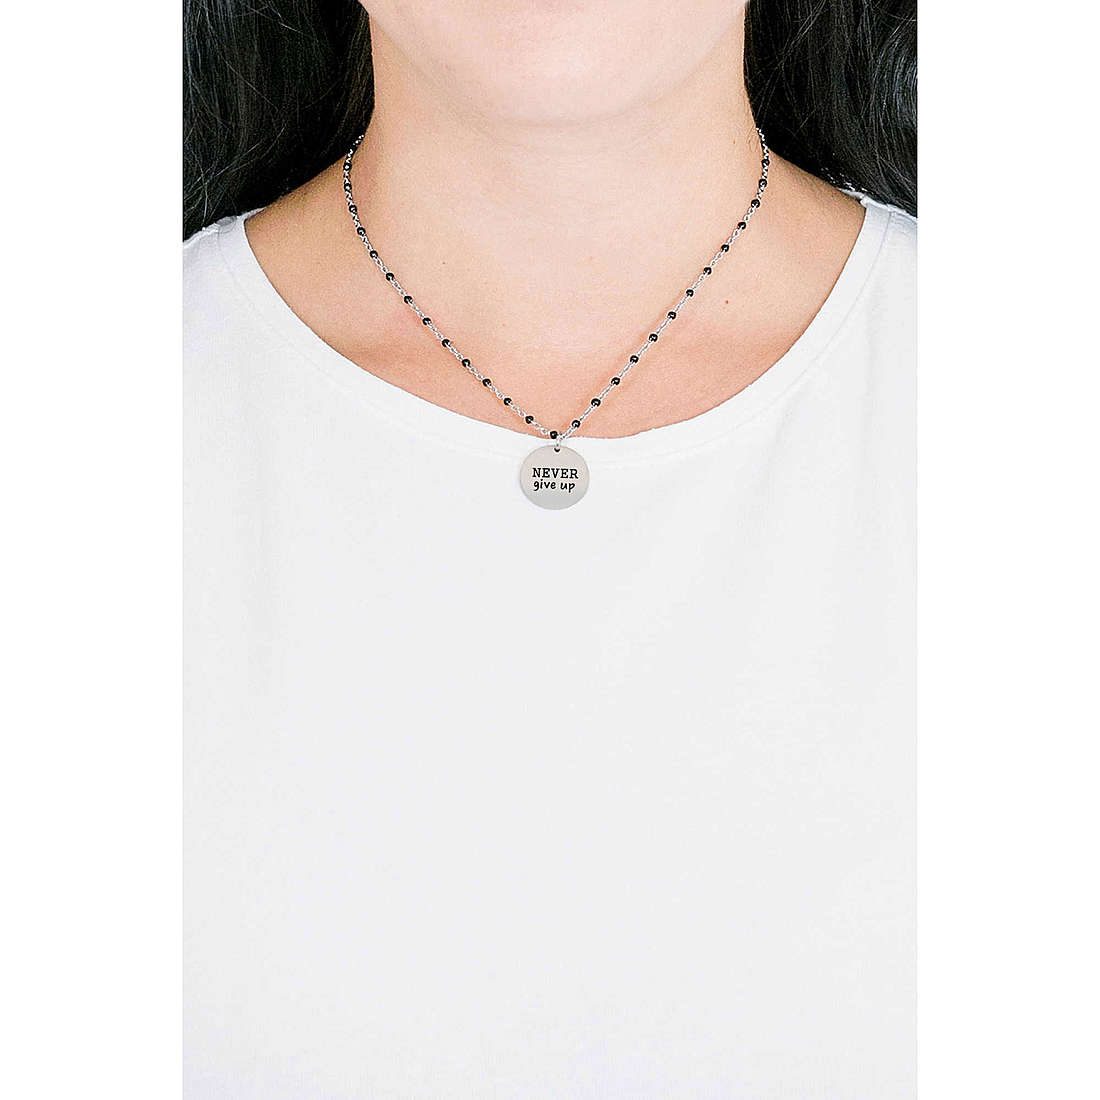 Kidult necklaces Philosophy woman 751097 wearing